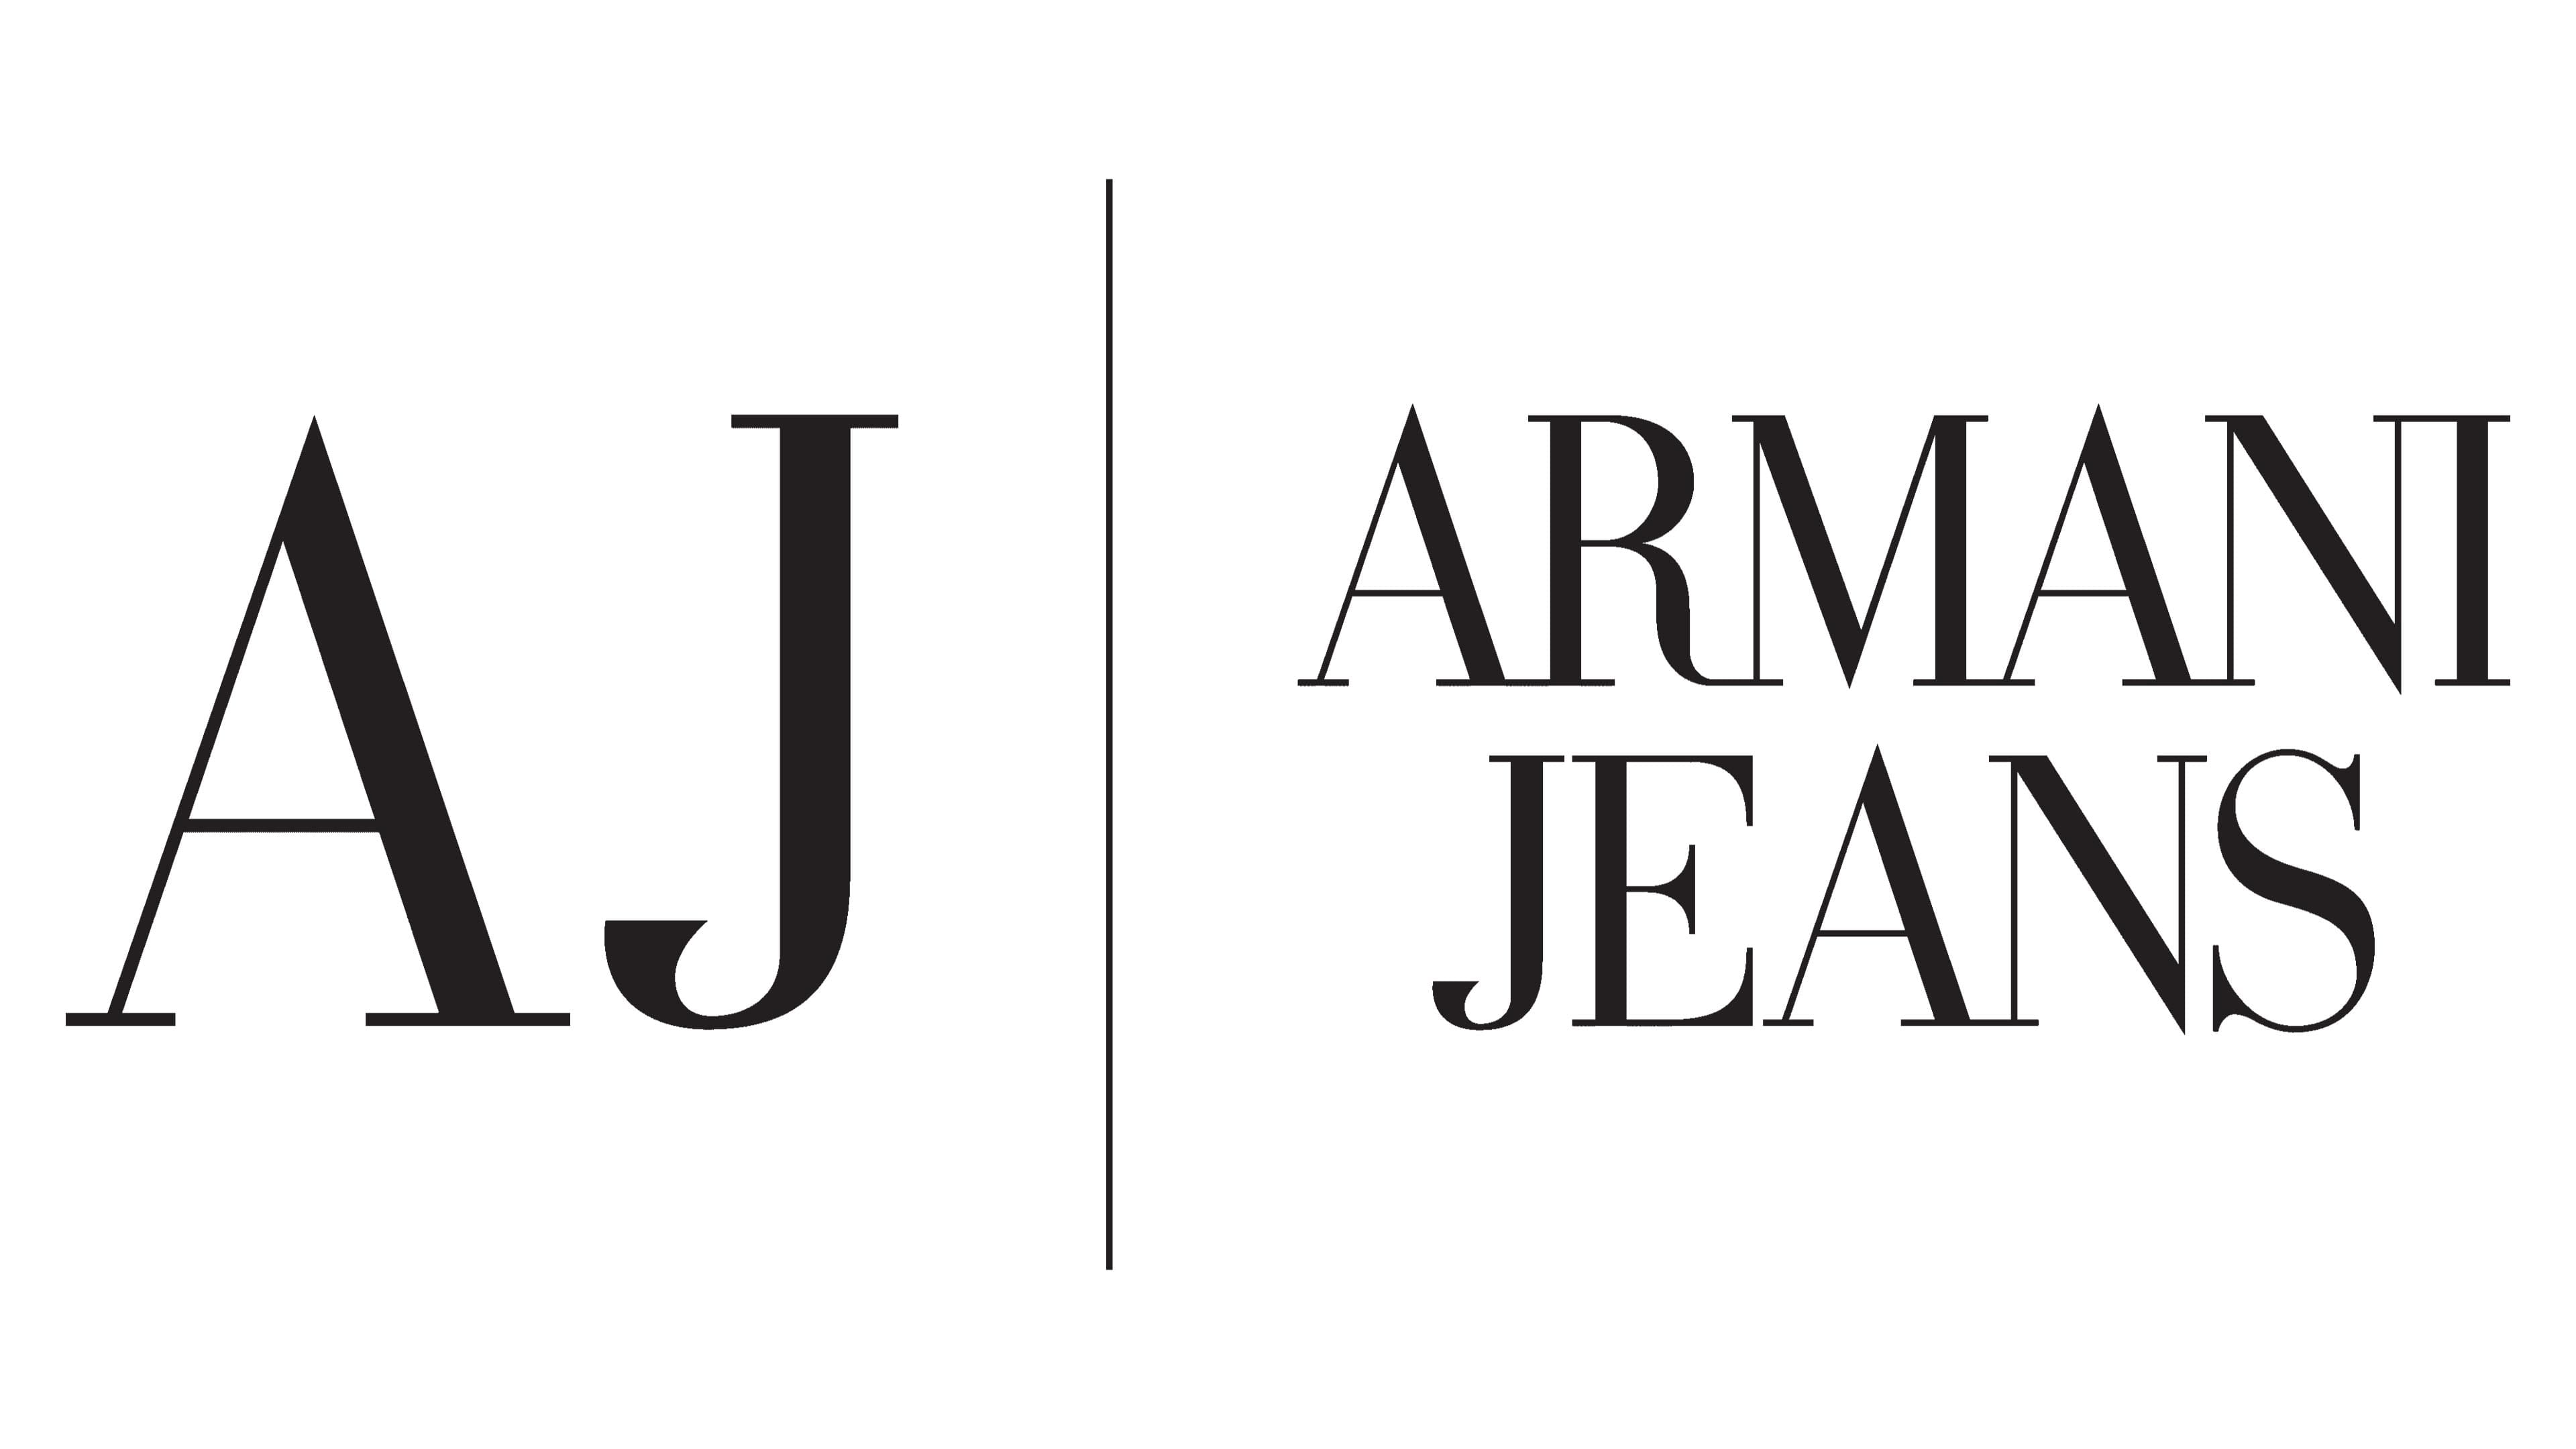 Emporio armani brand logo symbol design clothes Vector Image